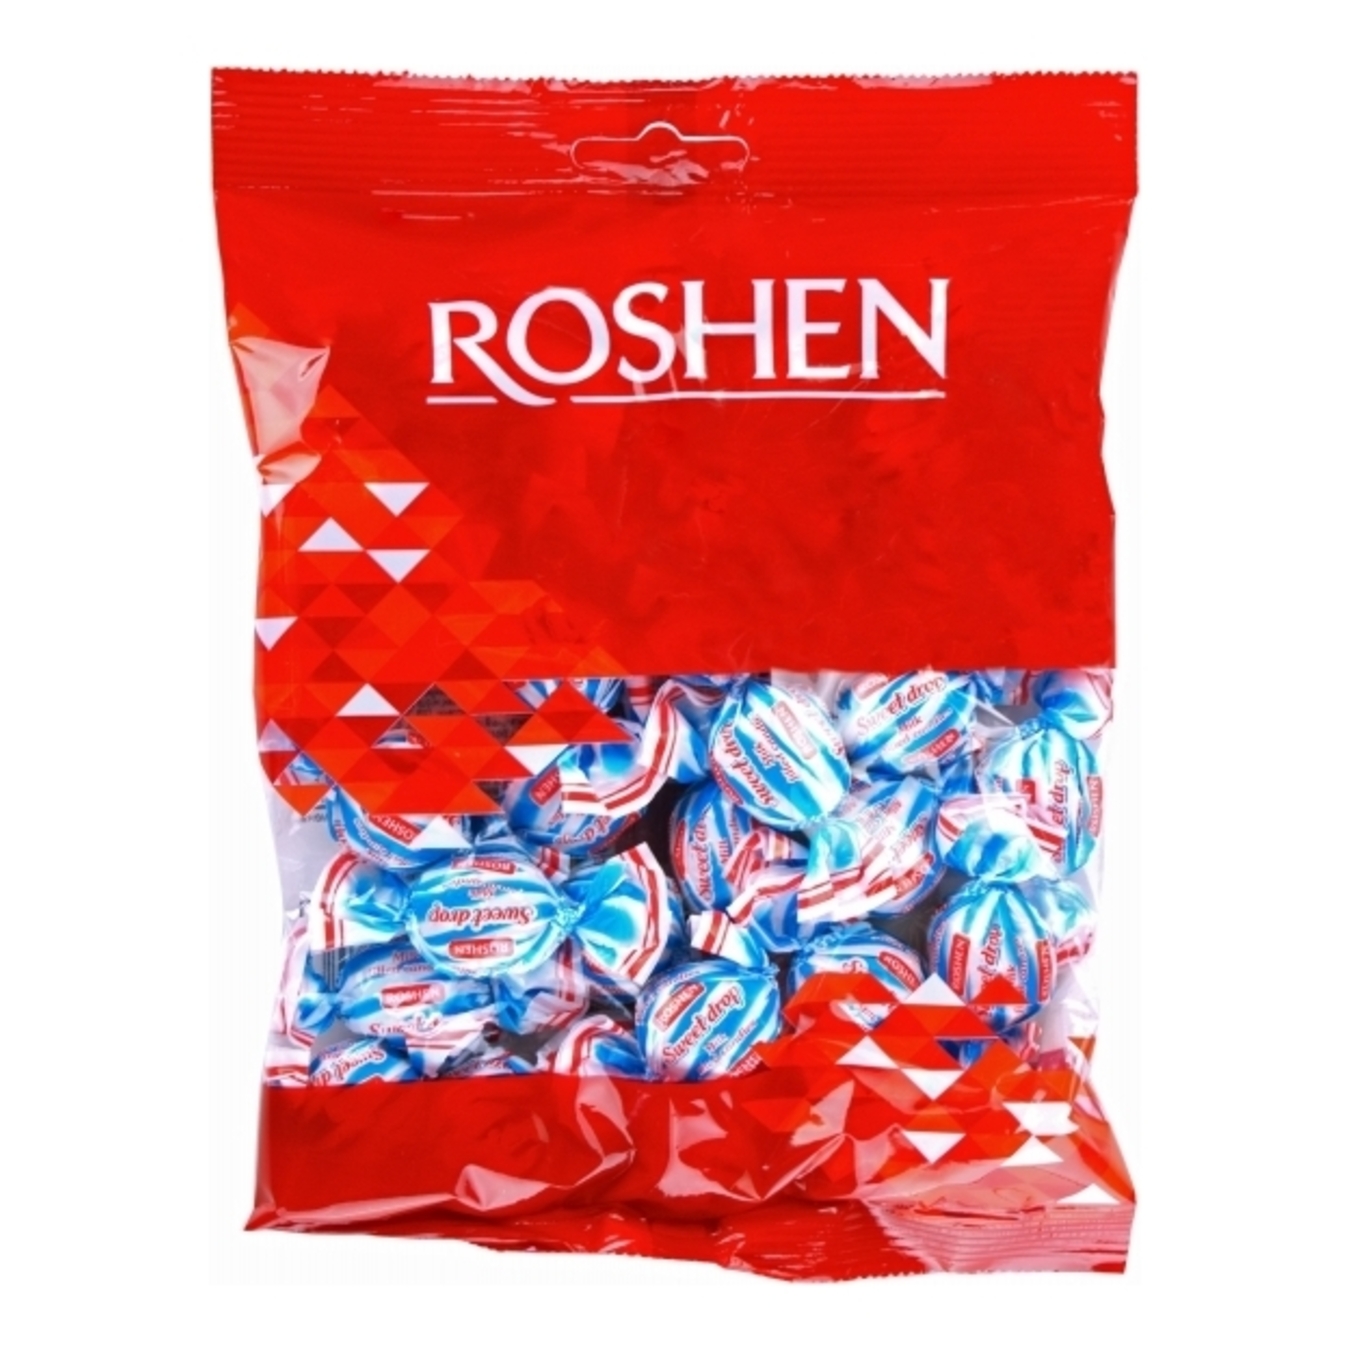 Roshen milk caramel candy 150g